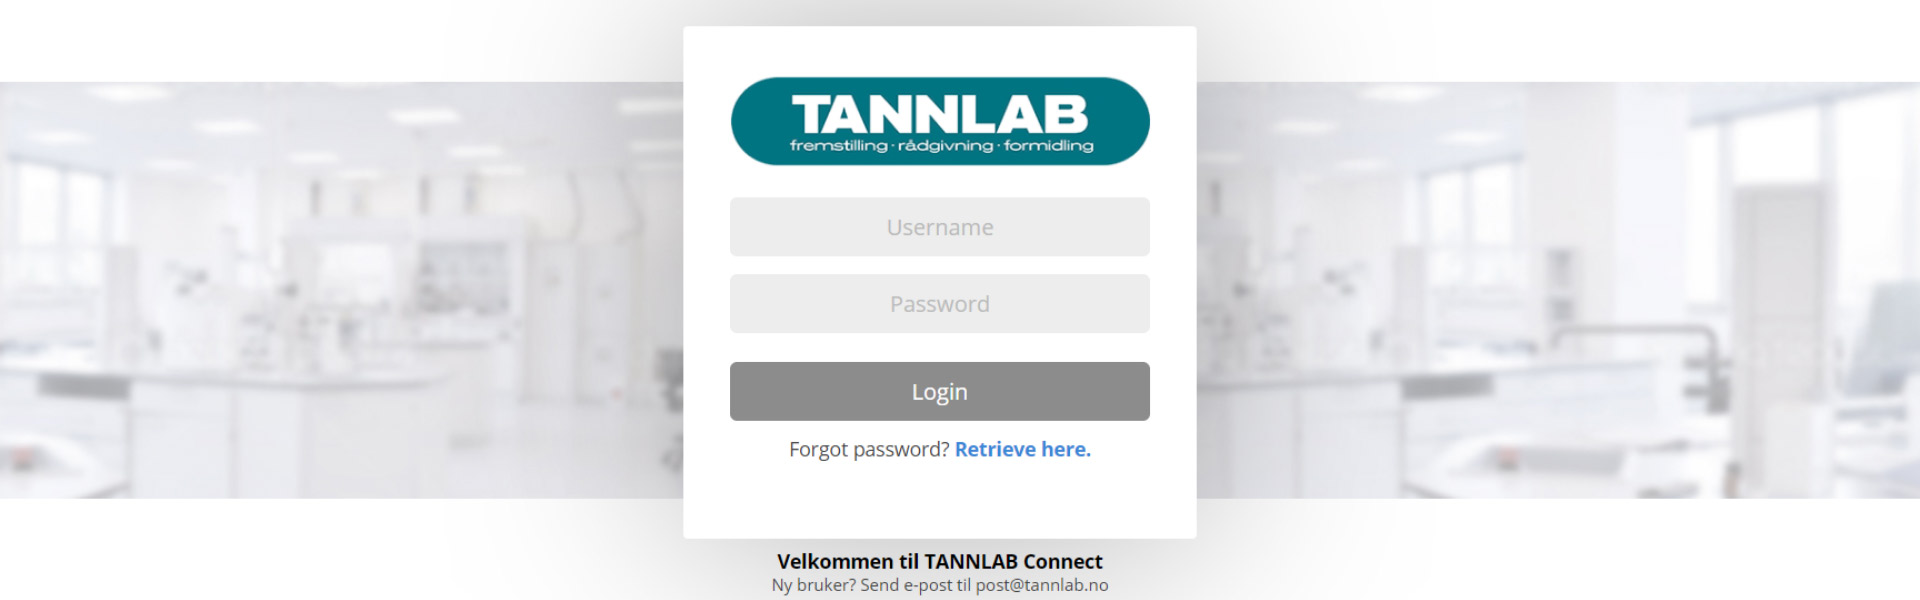 Tannlab-connect.jpg